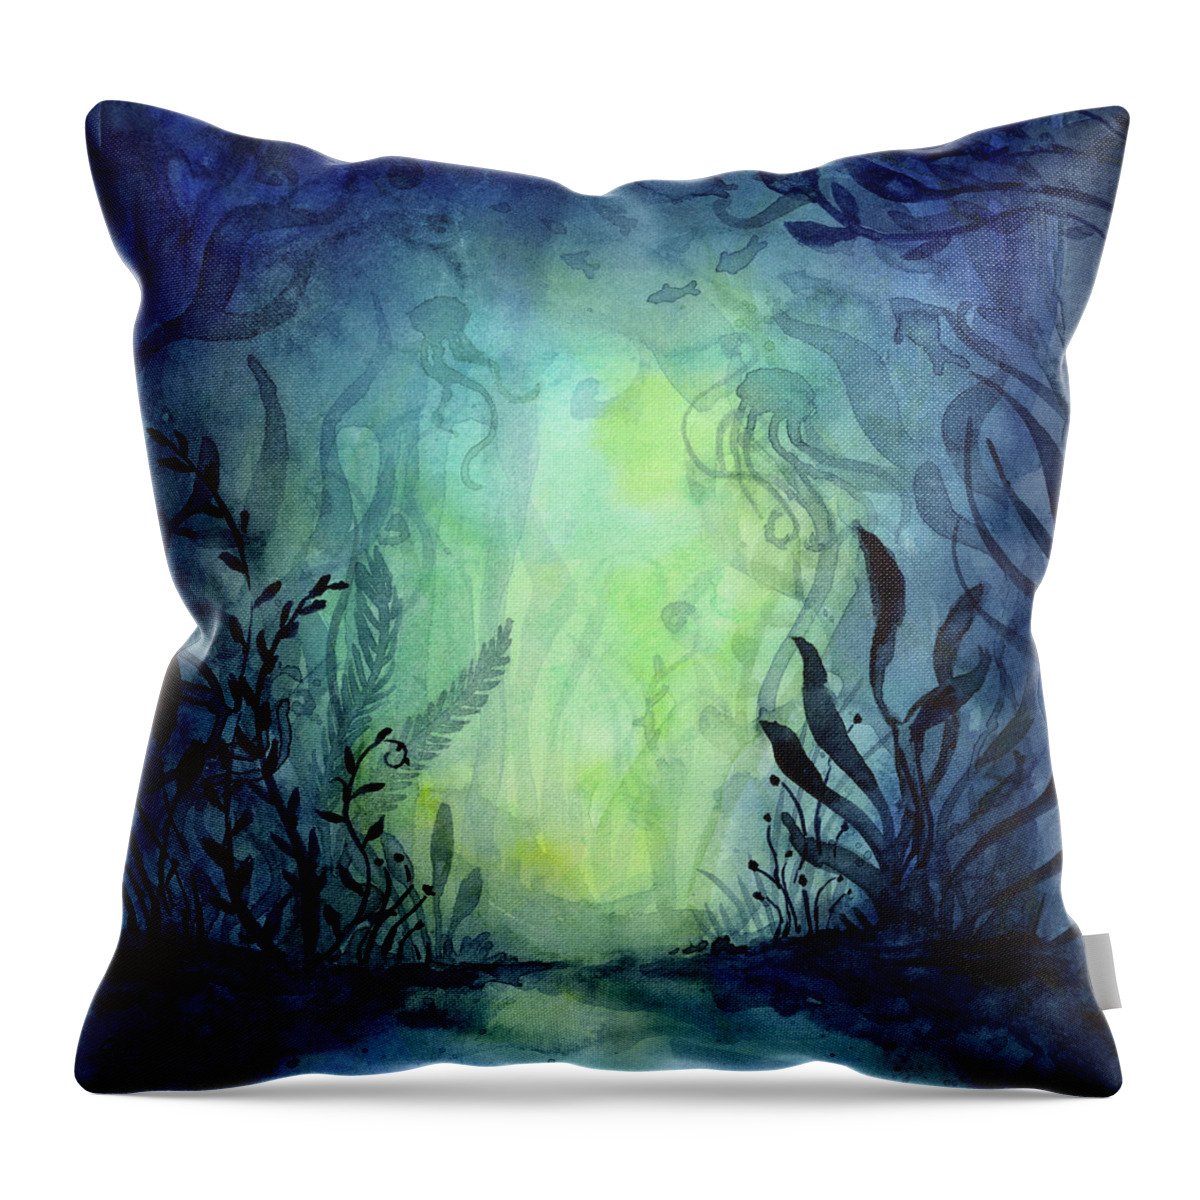 Ocean Throw Pillow featuring the painting Ocean Foliage by Olga Shvartsur